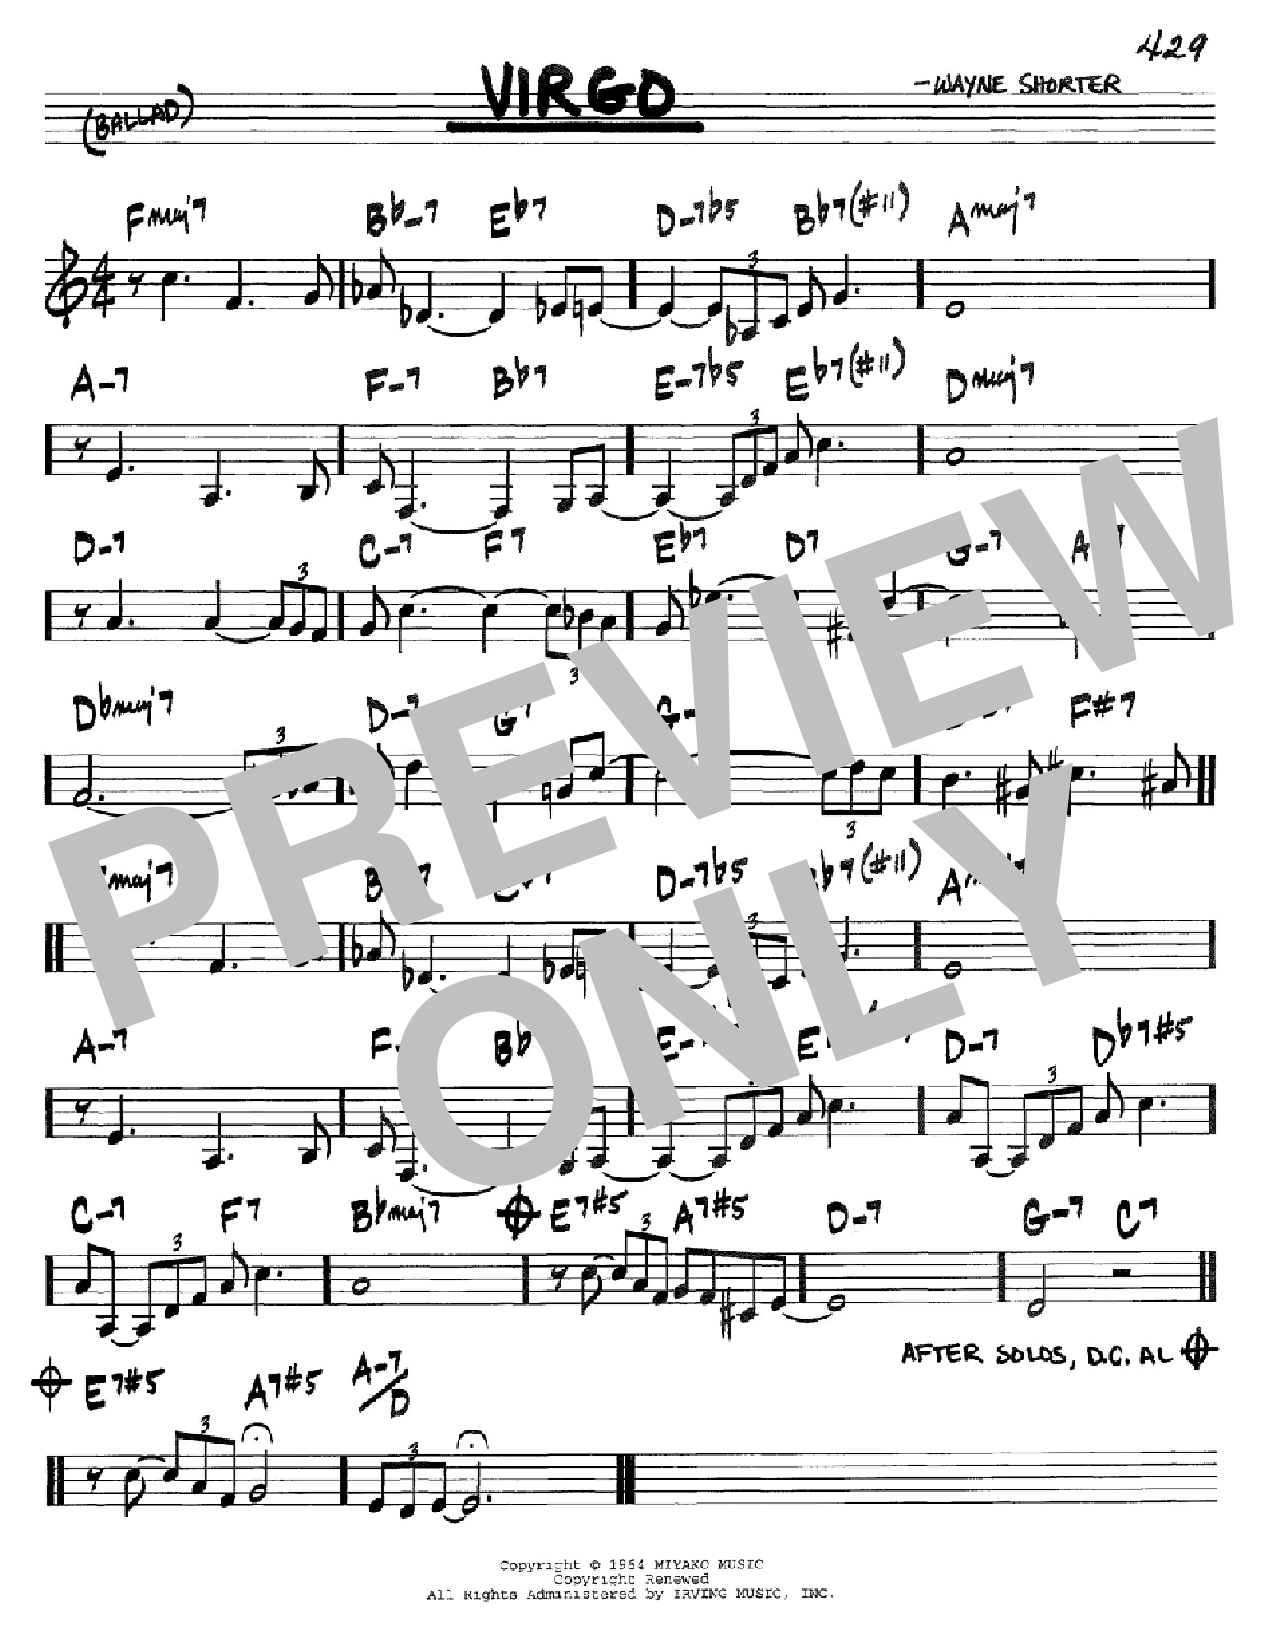 Wayne Shorter Virgo sheet music notes and chords arranged for Tenor Sax Transcription